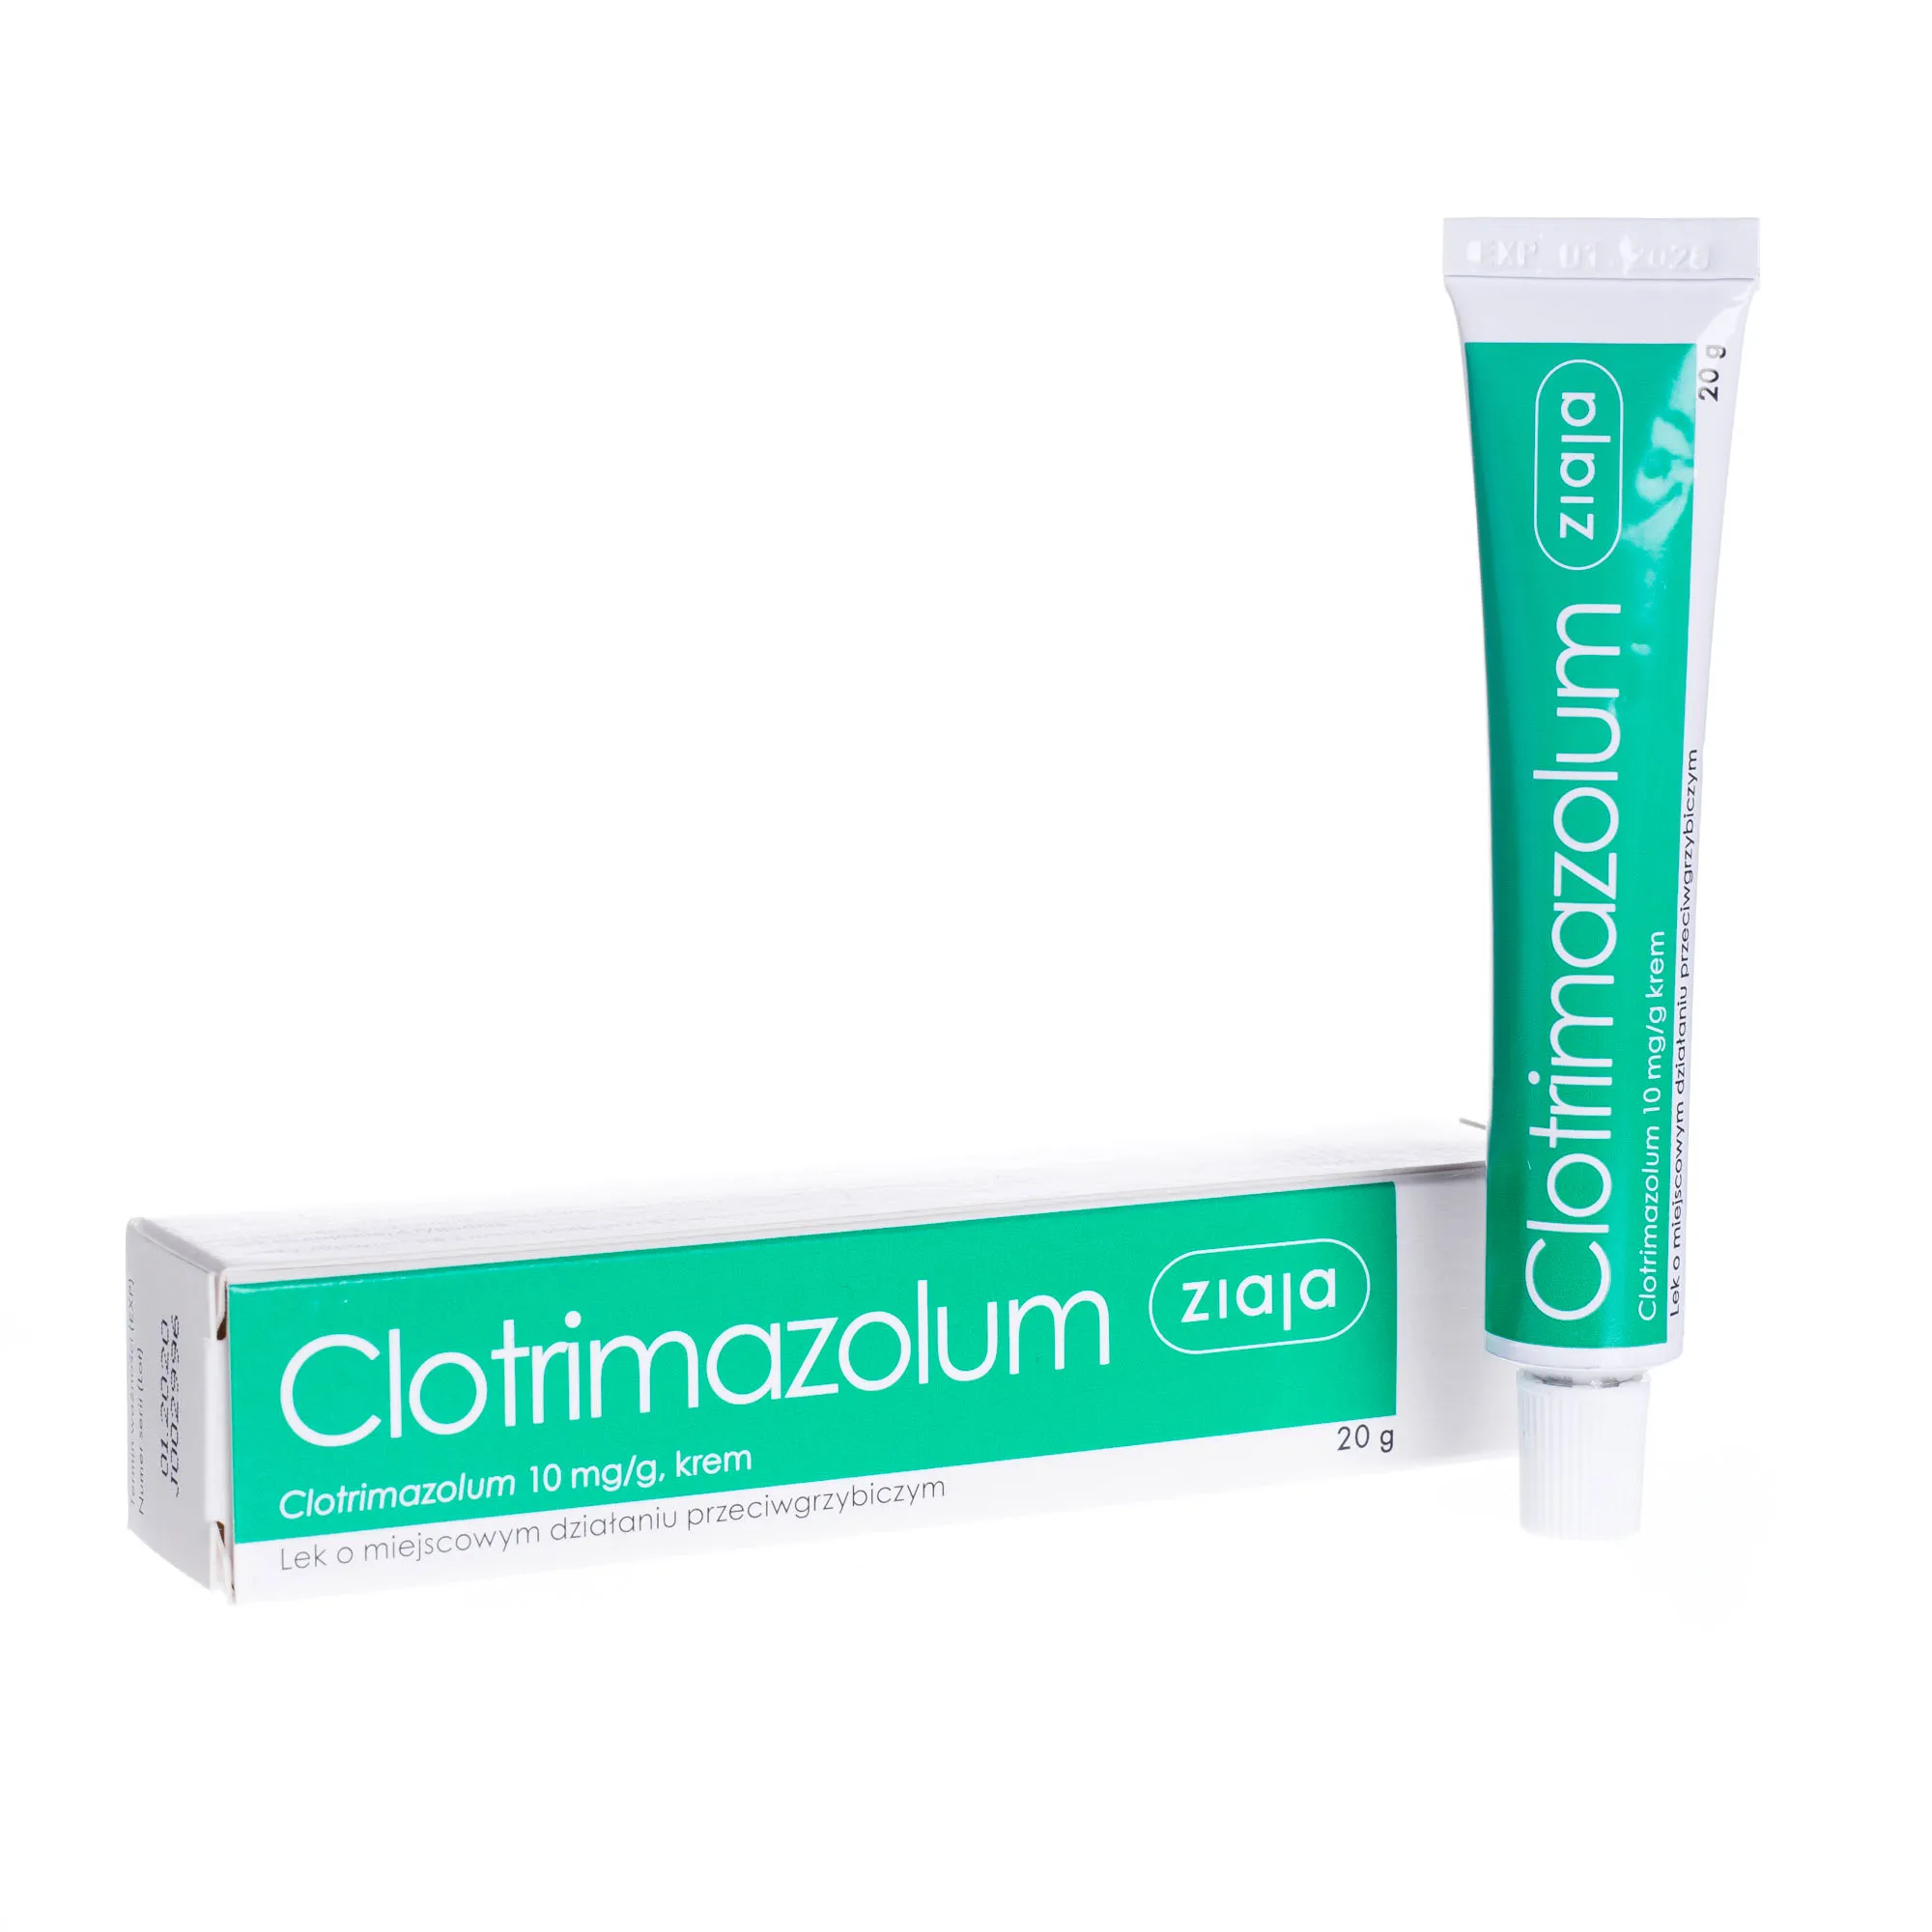 Ziaja Clotrimazolum 10 mg/g, krem 20 g 